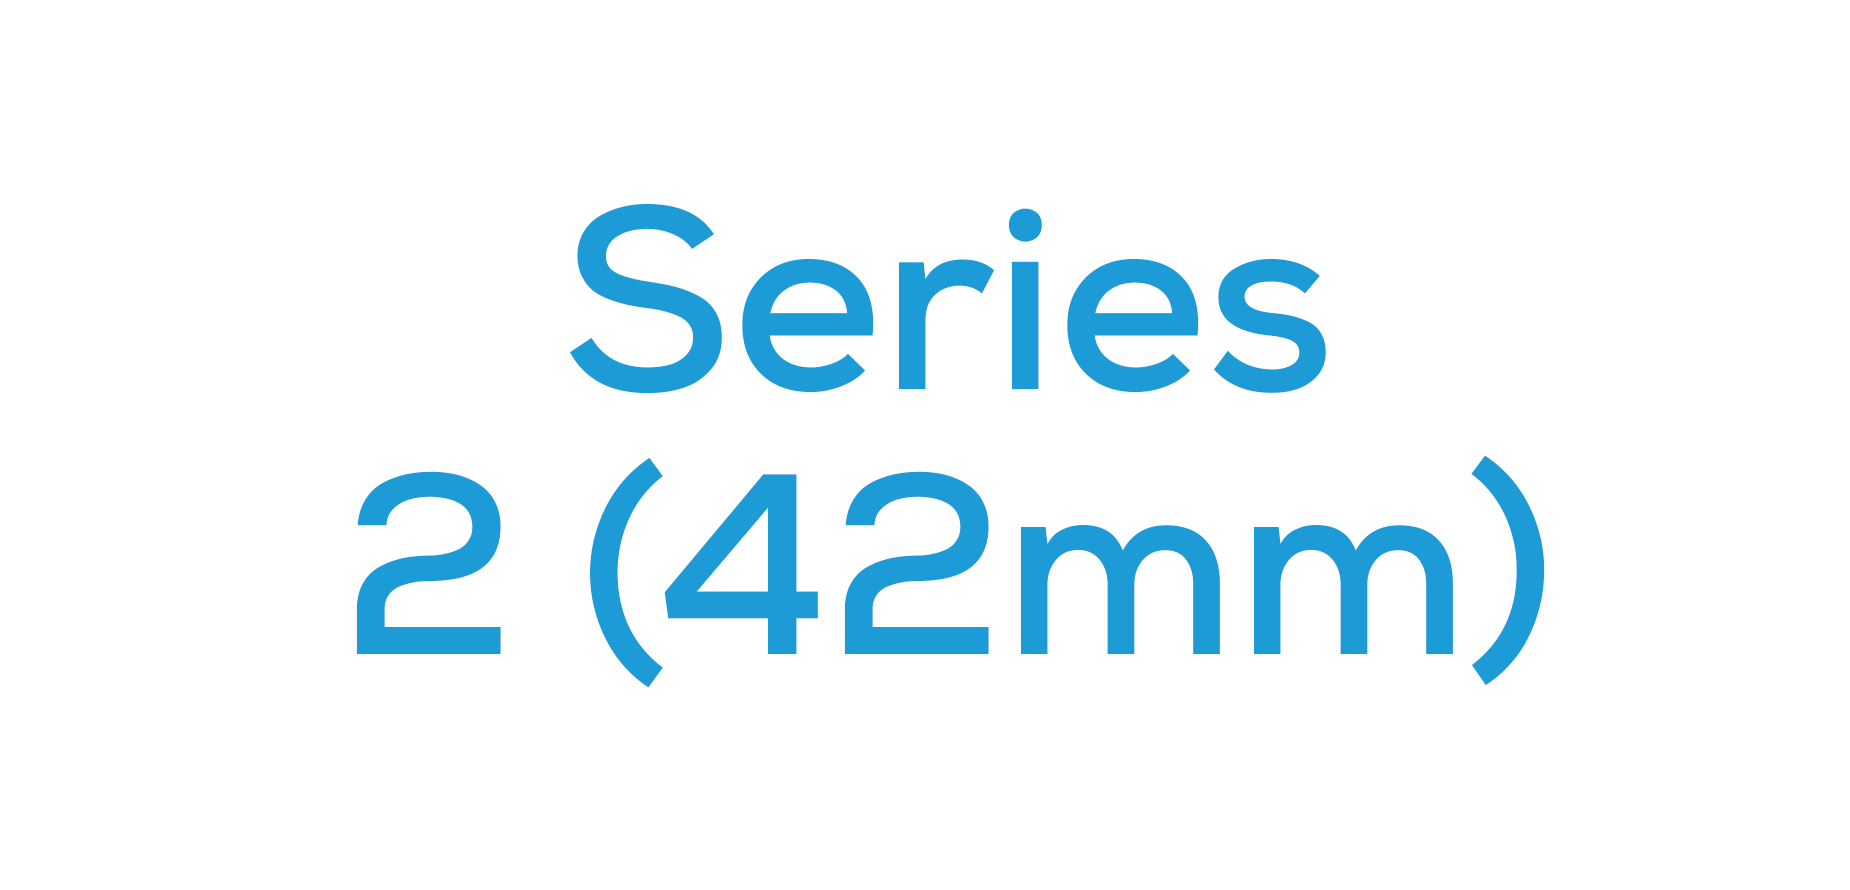 Series 2 (42mm)